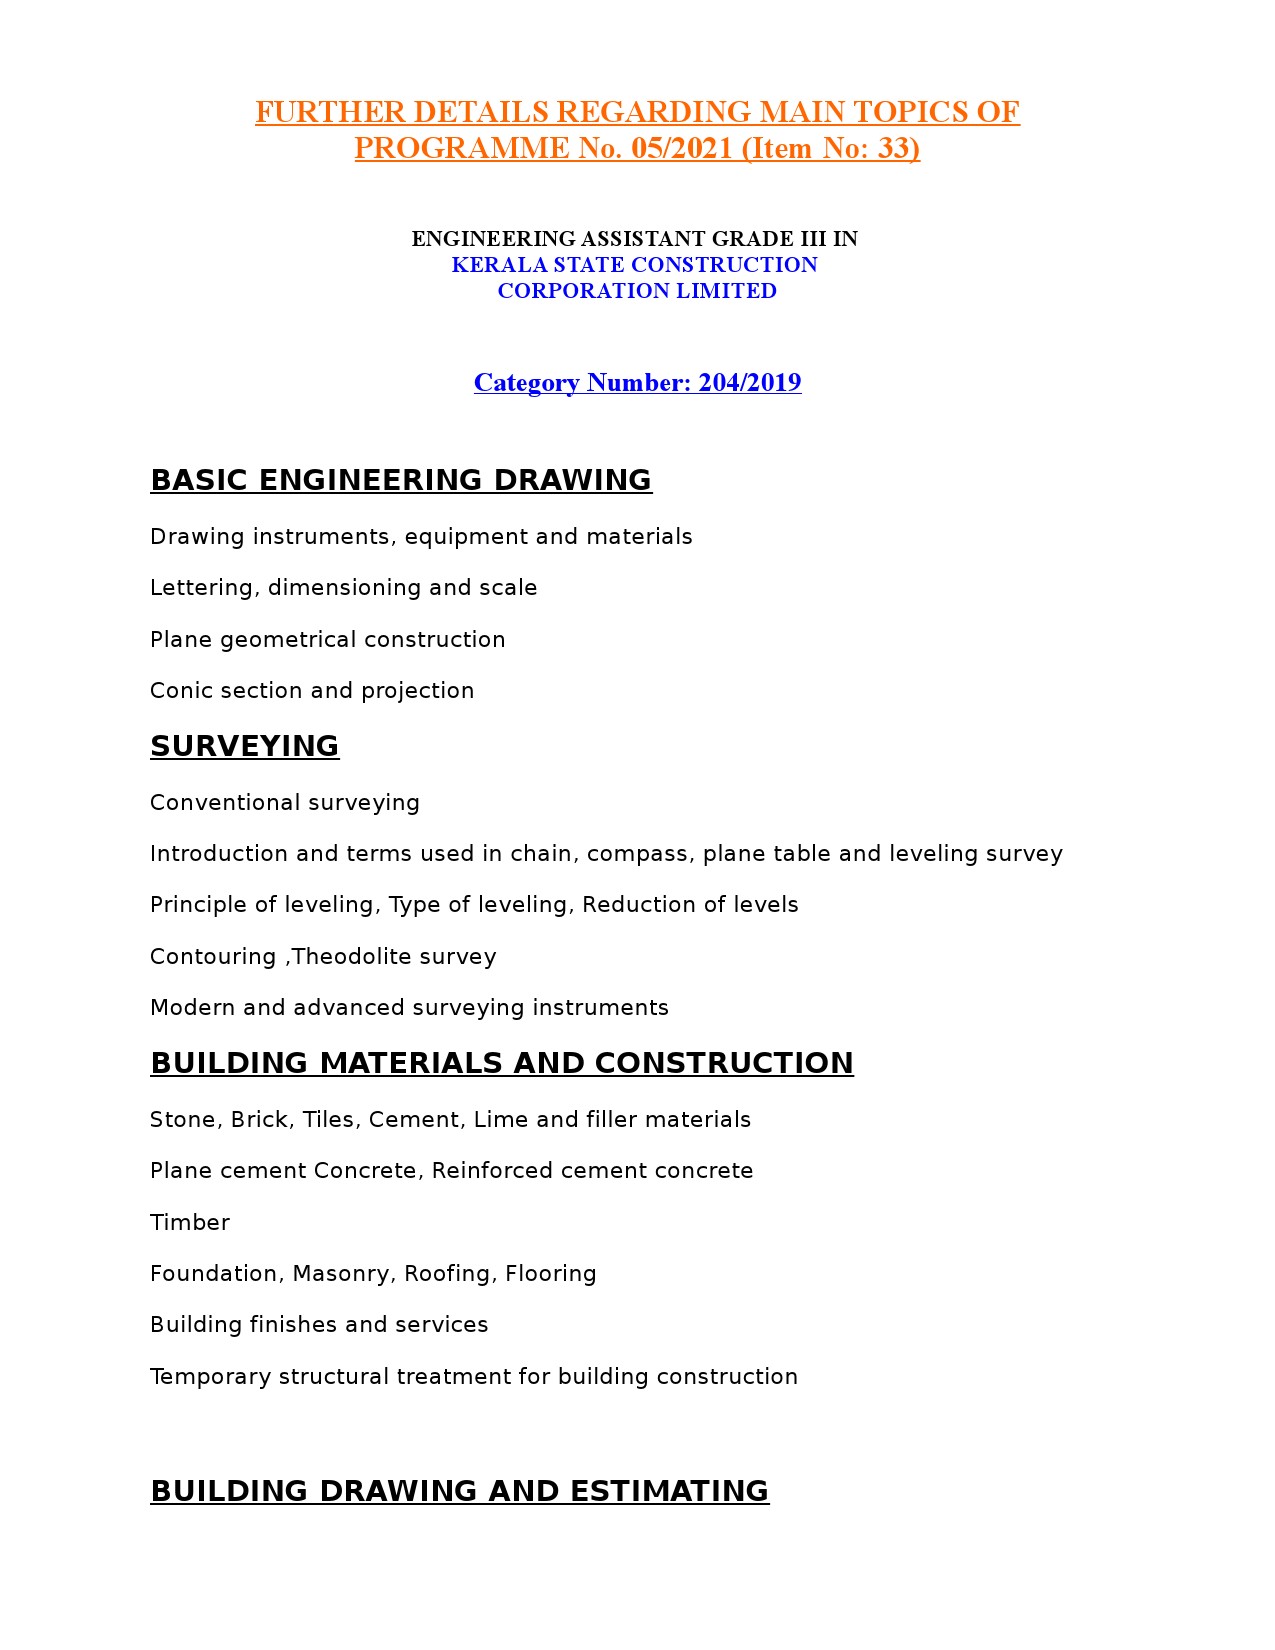 Engineering Assistant Grade III KPSC Exam Syllabus May 2021 - Notification Image 1